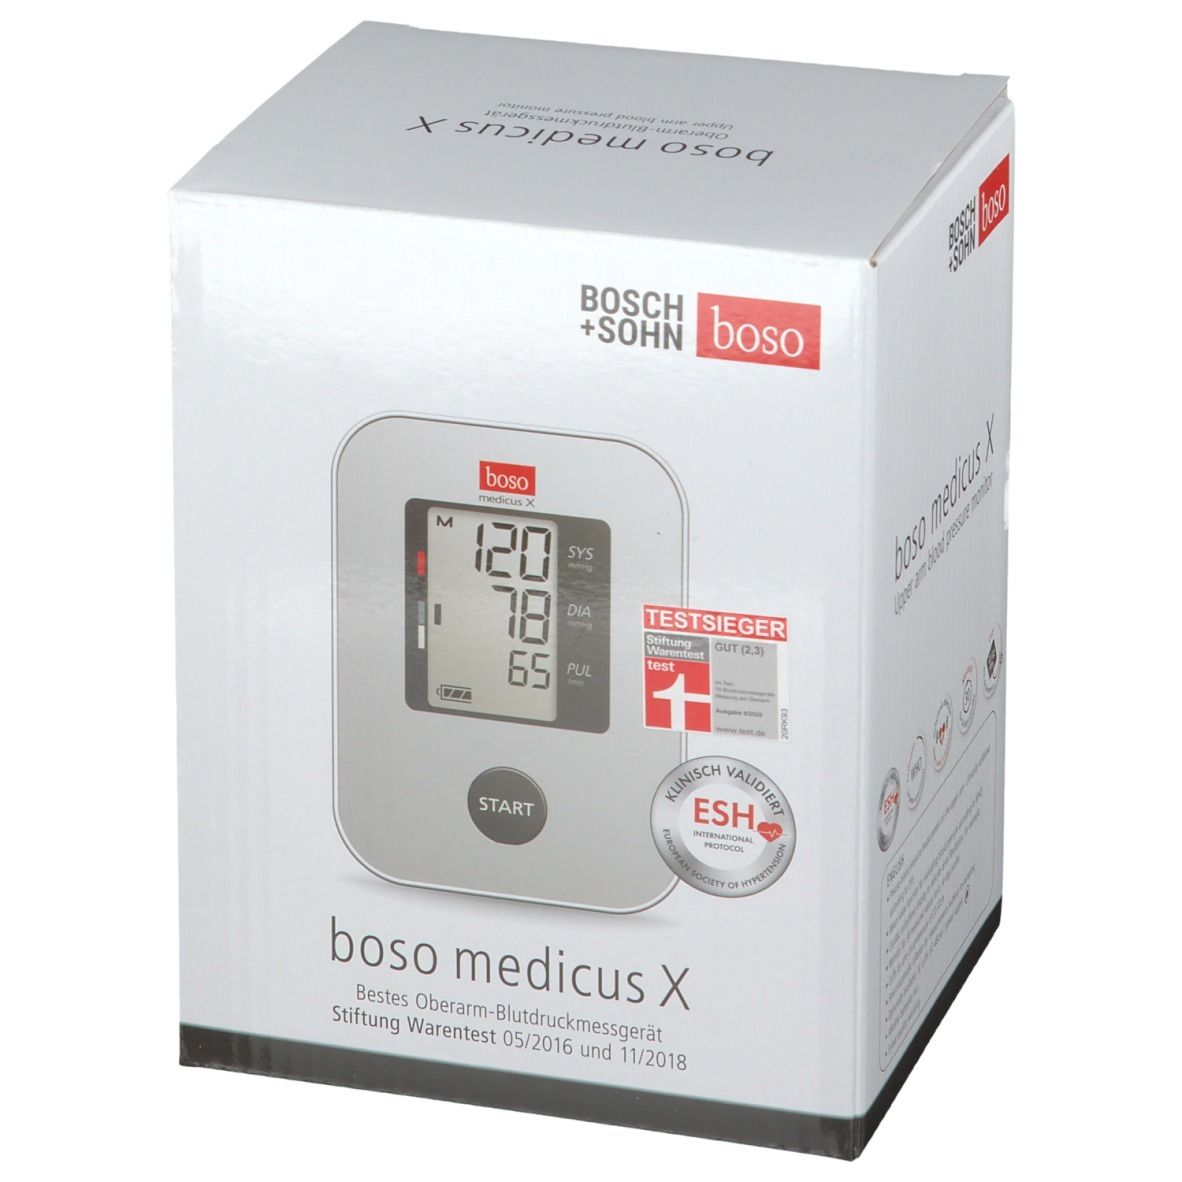 boso medicus X Blutdruckmessgerät